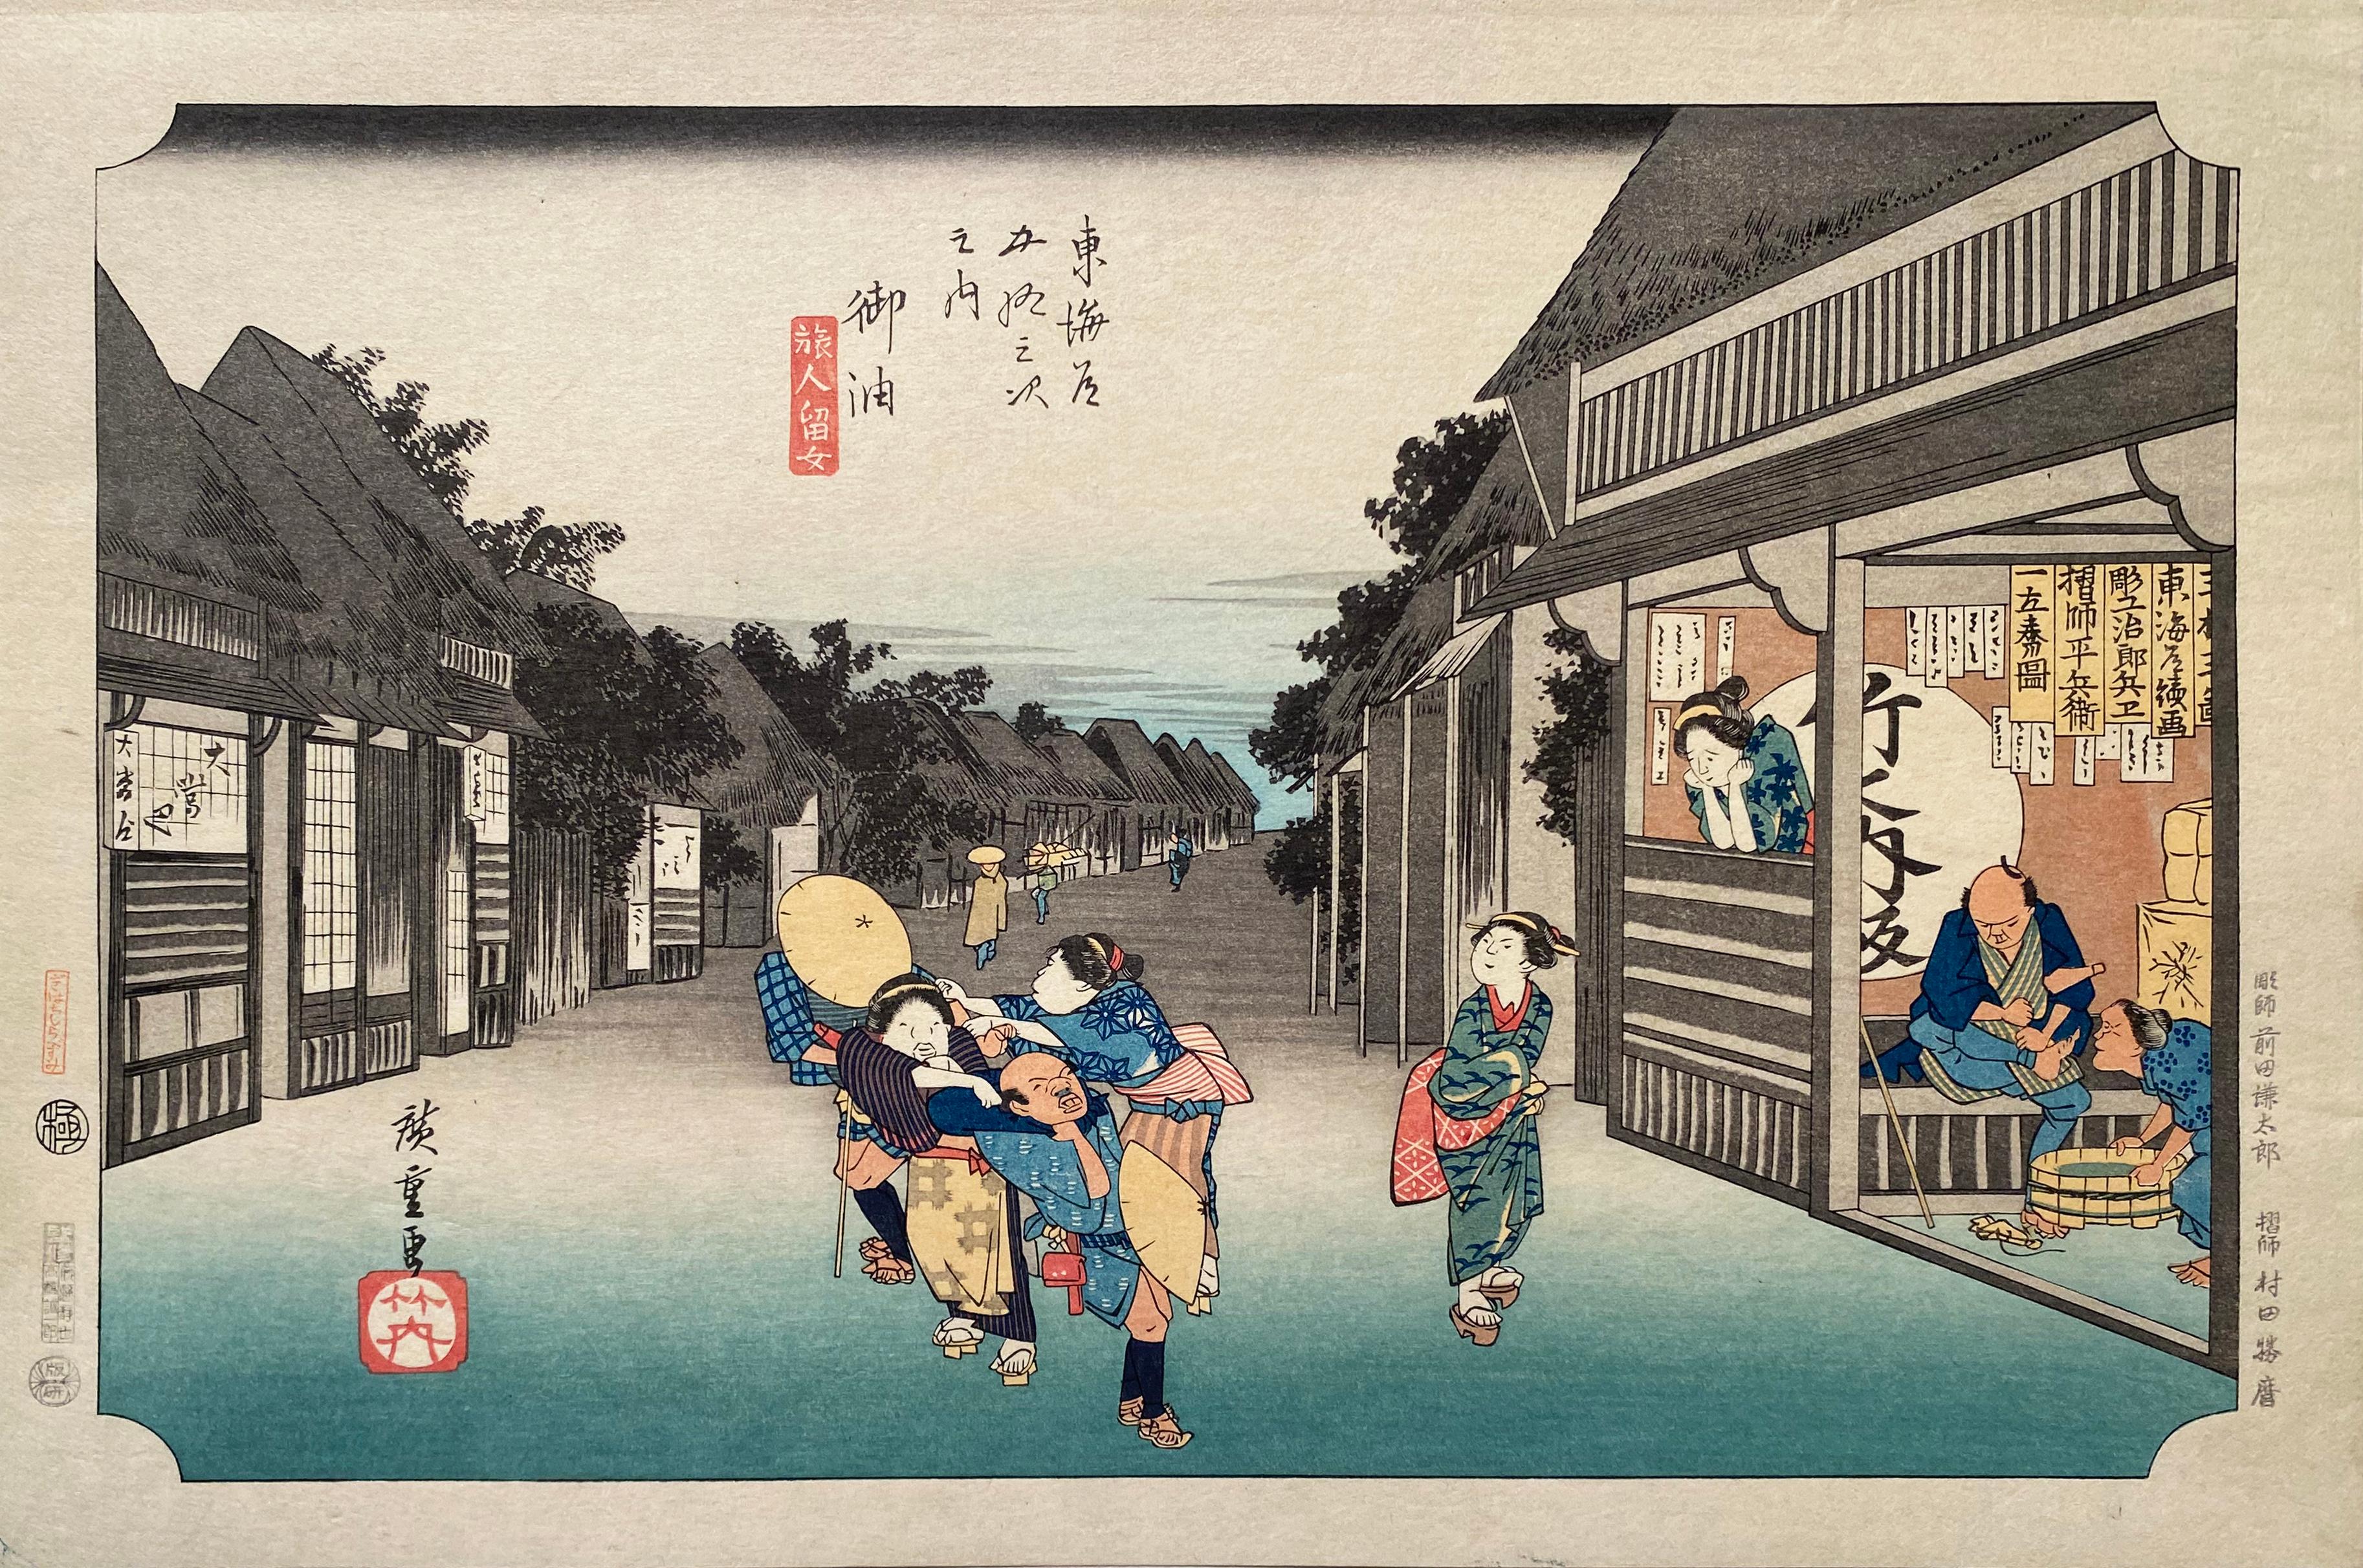 Utagawa Hiroshige (Ando Hiroshige) Landscape Print - 'View from Goyu', After Utagawa Hiroshige 歌川廣重, Ukiyo-e Woodblock, Tokaido